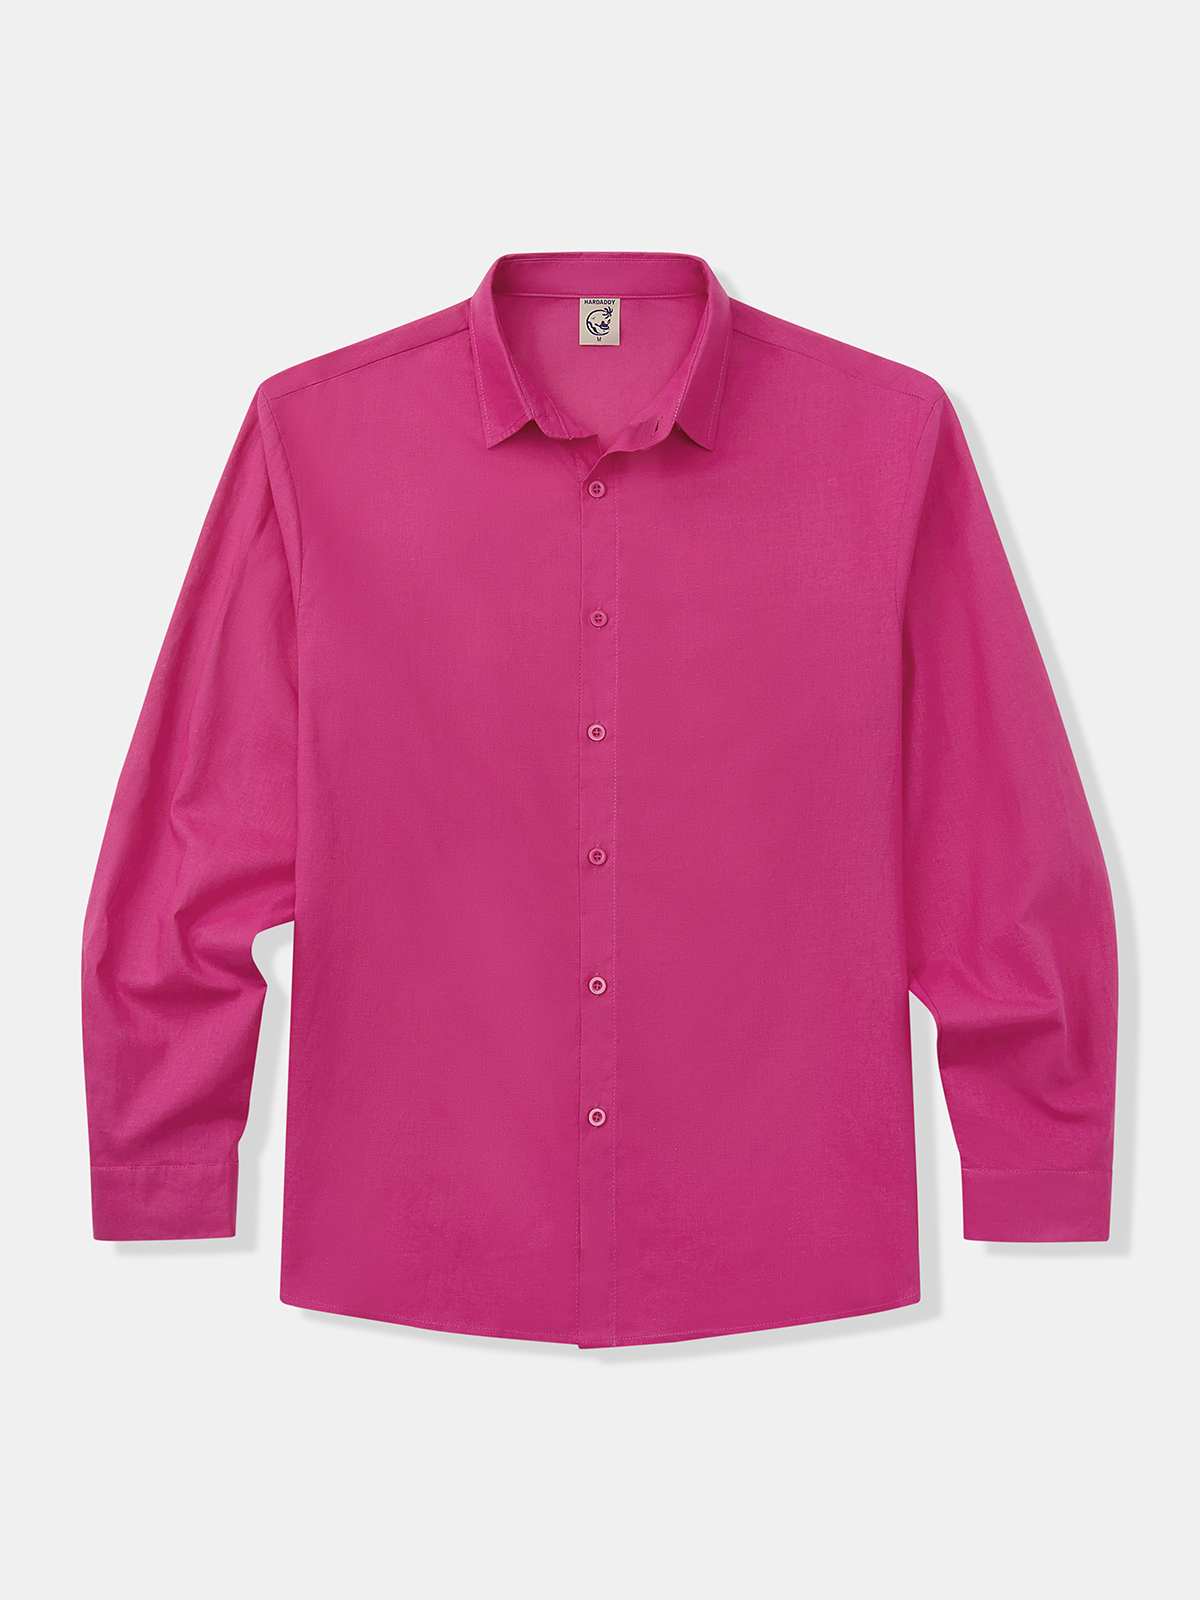 Hardaddy Pink 100% Cotton Plain Long Sleeve Casual Hawaiian Men's Shirt